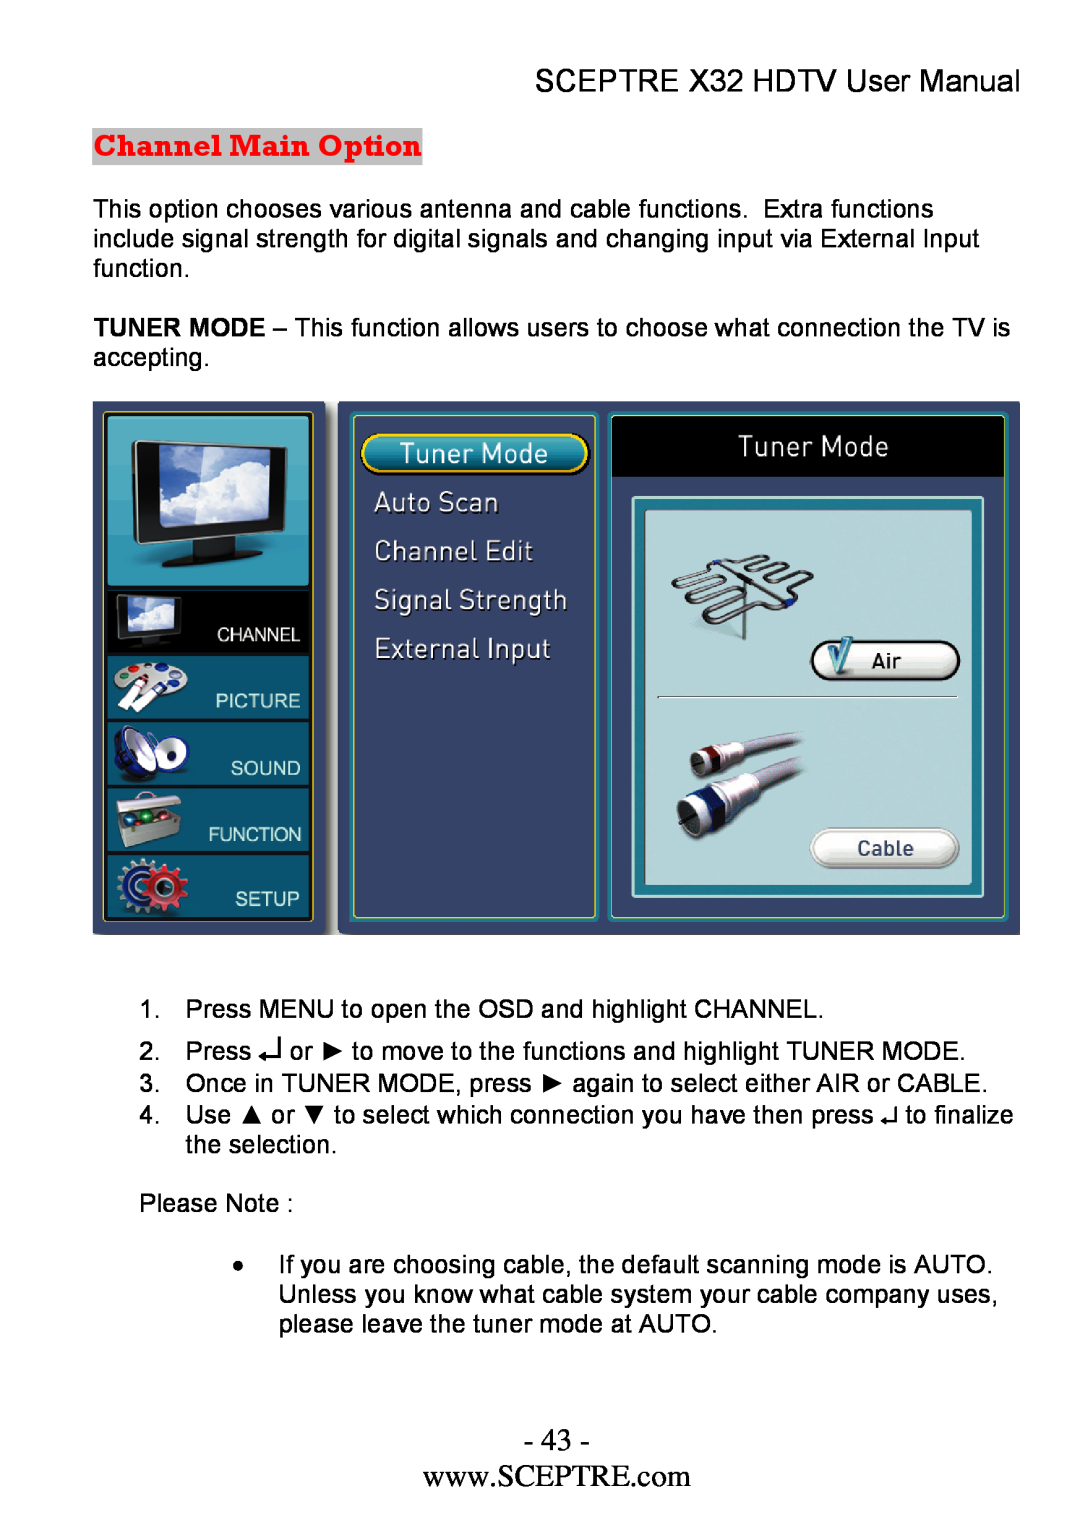 Sceptre Technologies x32 user manual Channel Main Option, SCEPTRE X32 HDTV User Manual 